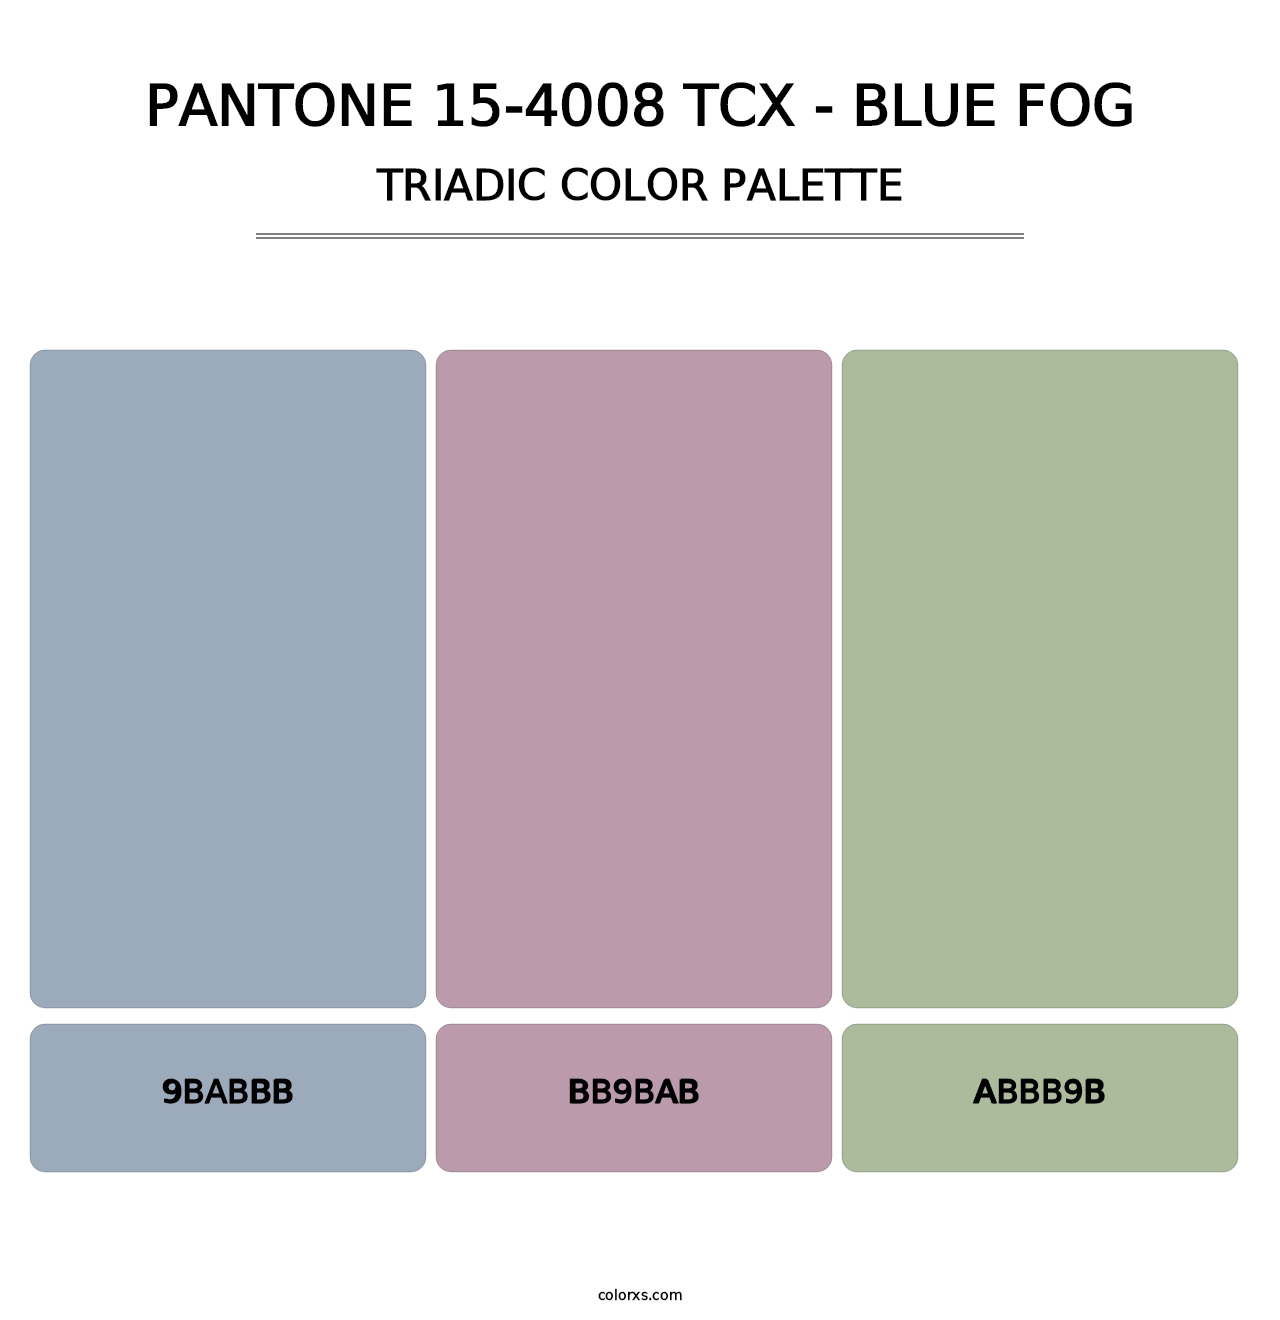 PANTONE 15-4008 TCX - Blue Fog - Triadic Color Palette